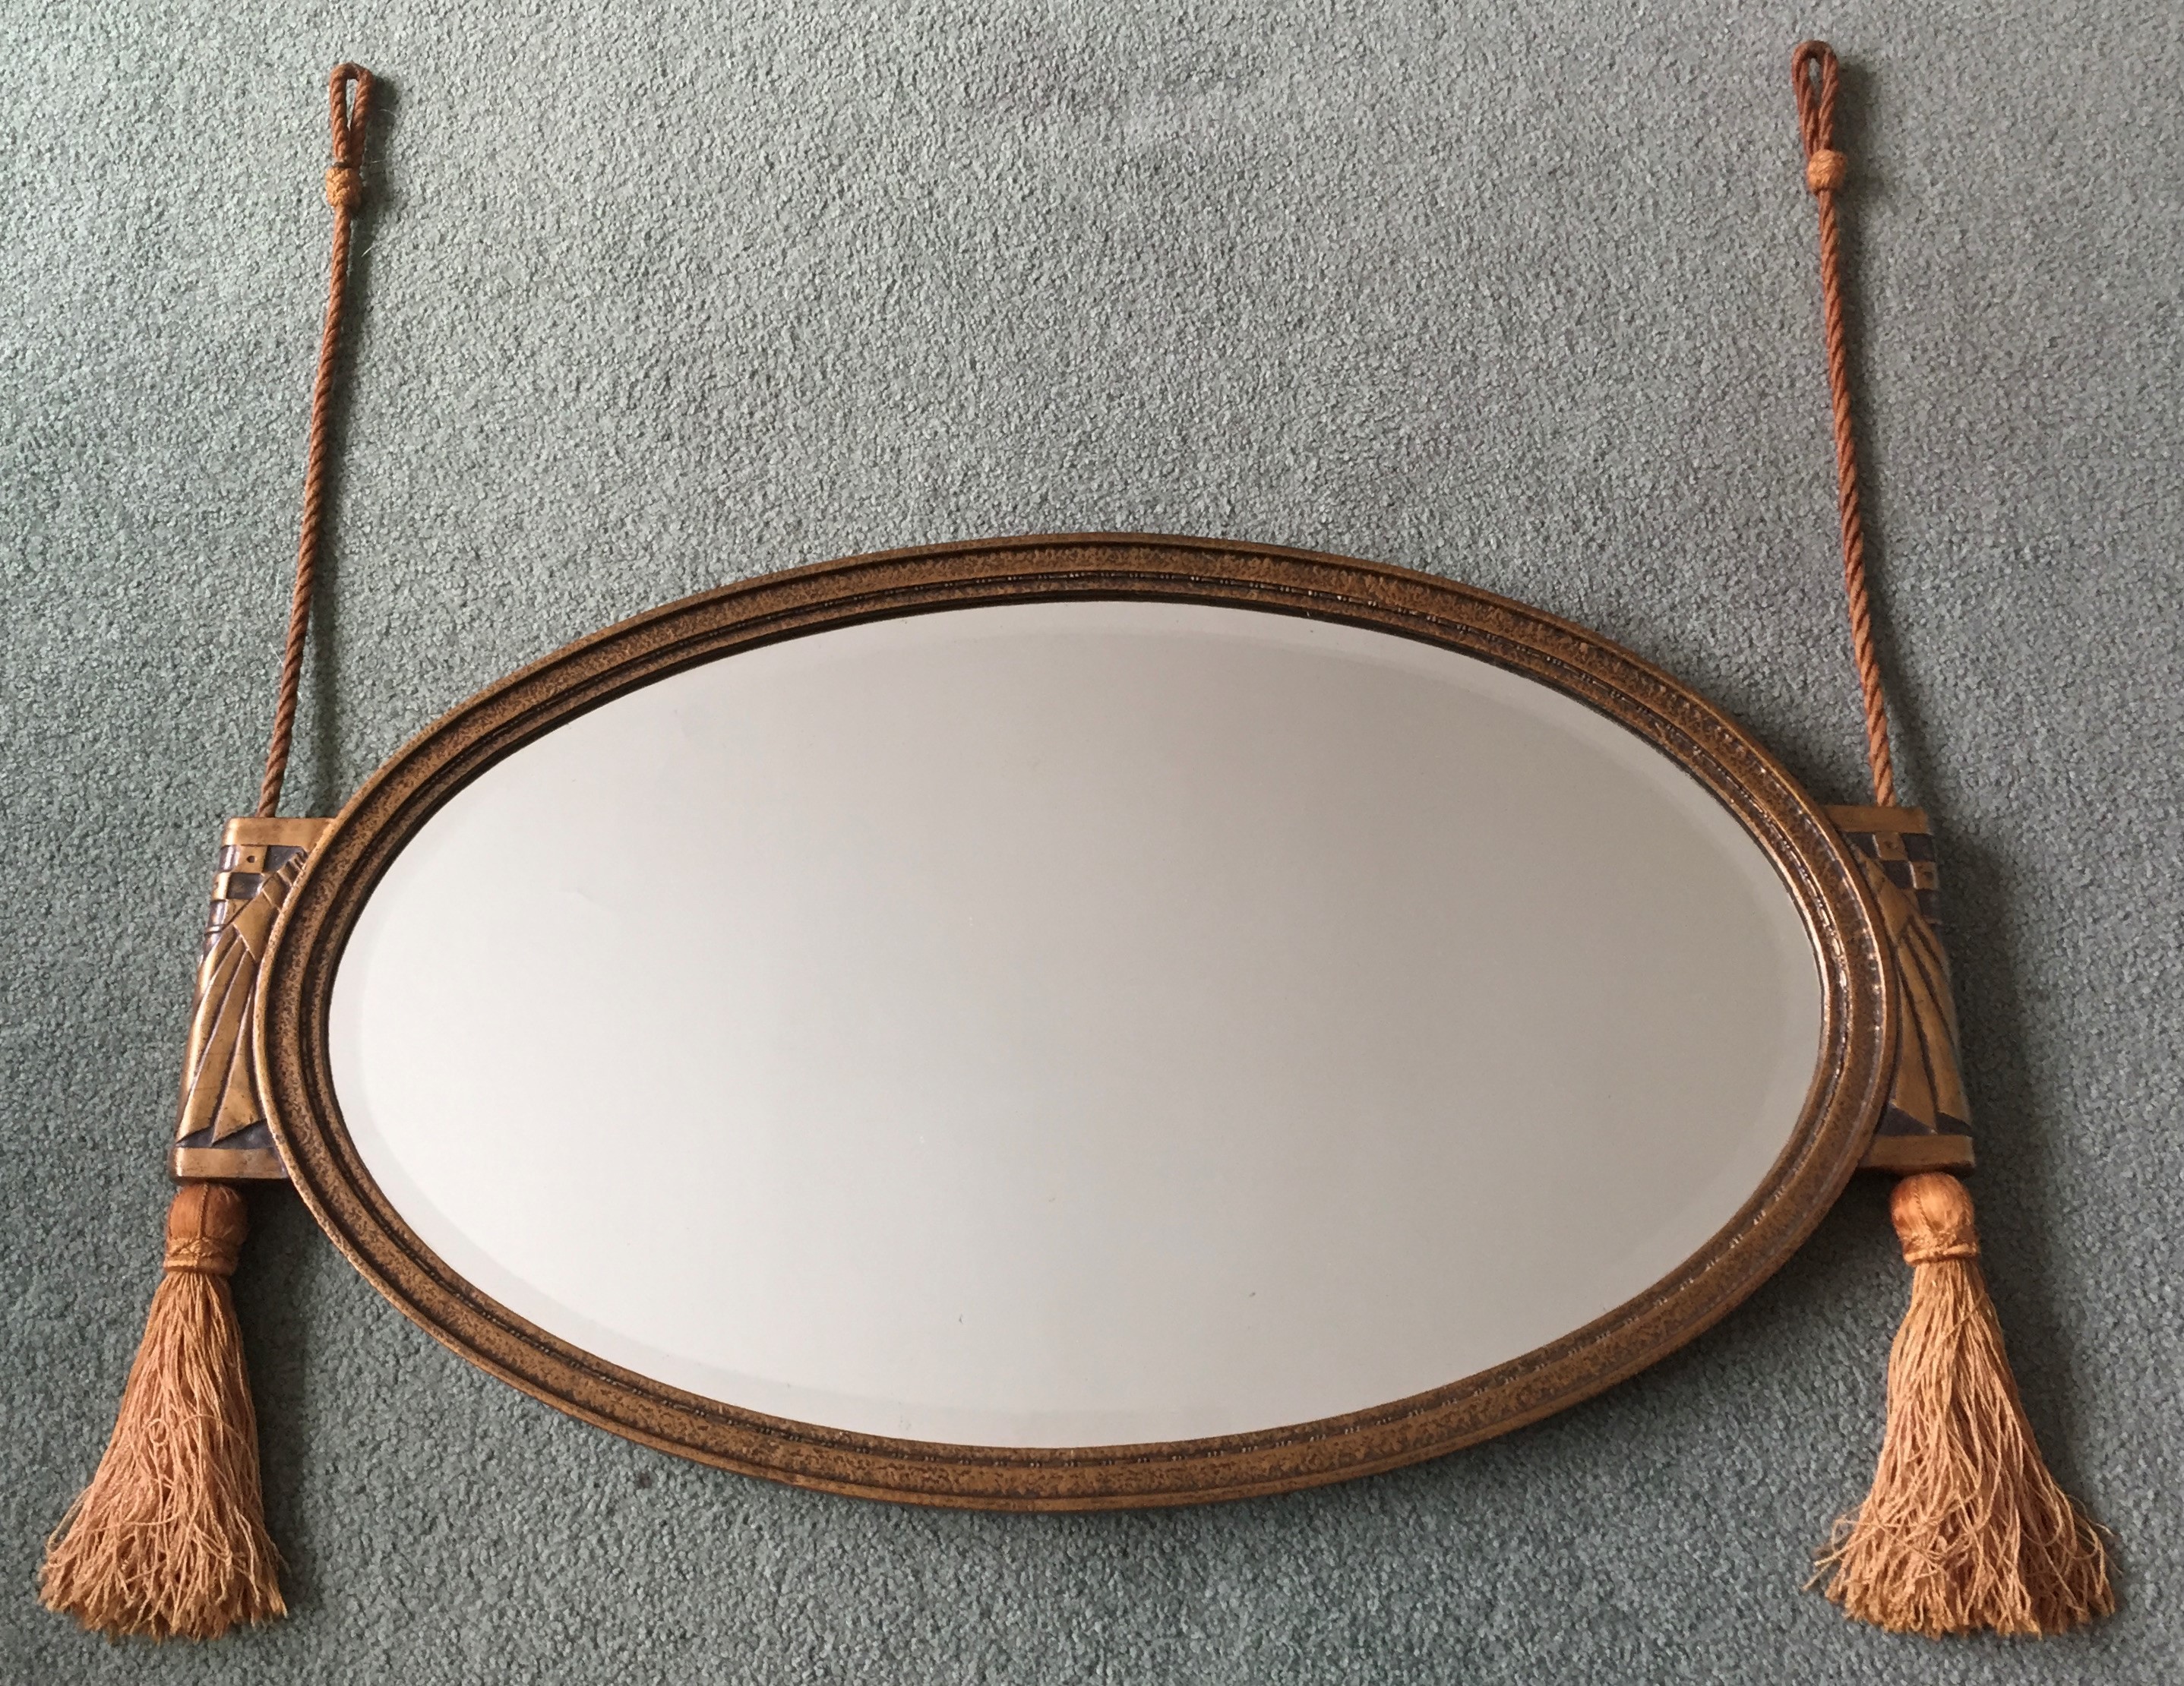 An Art Deco style oval wall mirror, width 74cm, height 43cm